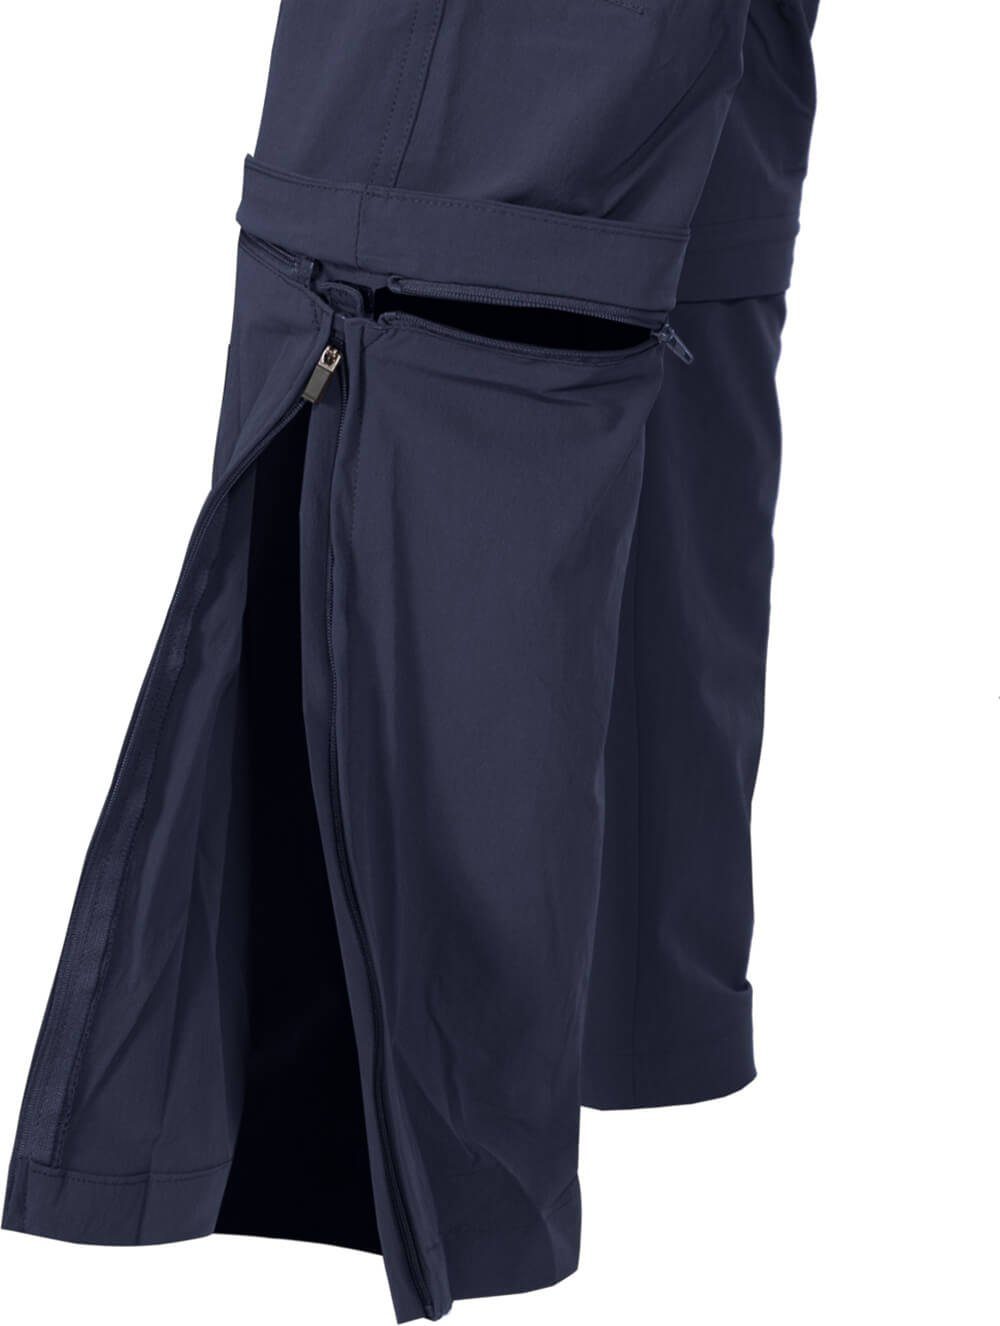 Bergson Zip-off-Hose QUEENSLAND Doppel vielseitig, Wanderhose, pflegeleicht, Zipp-Off peacoat Normalgrößen, Herren T-ZIPP blau mit